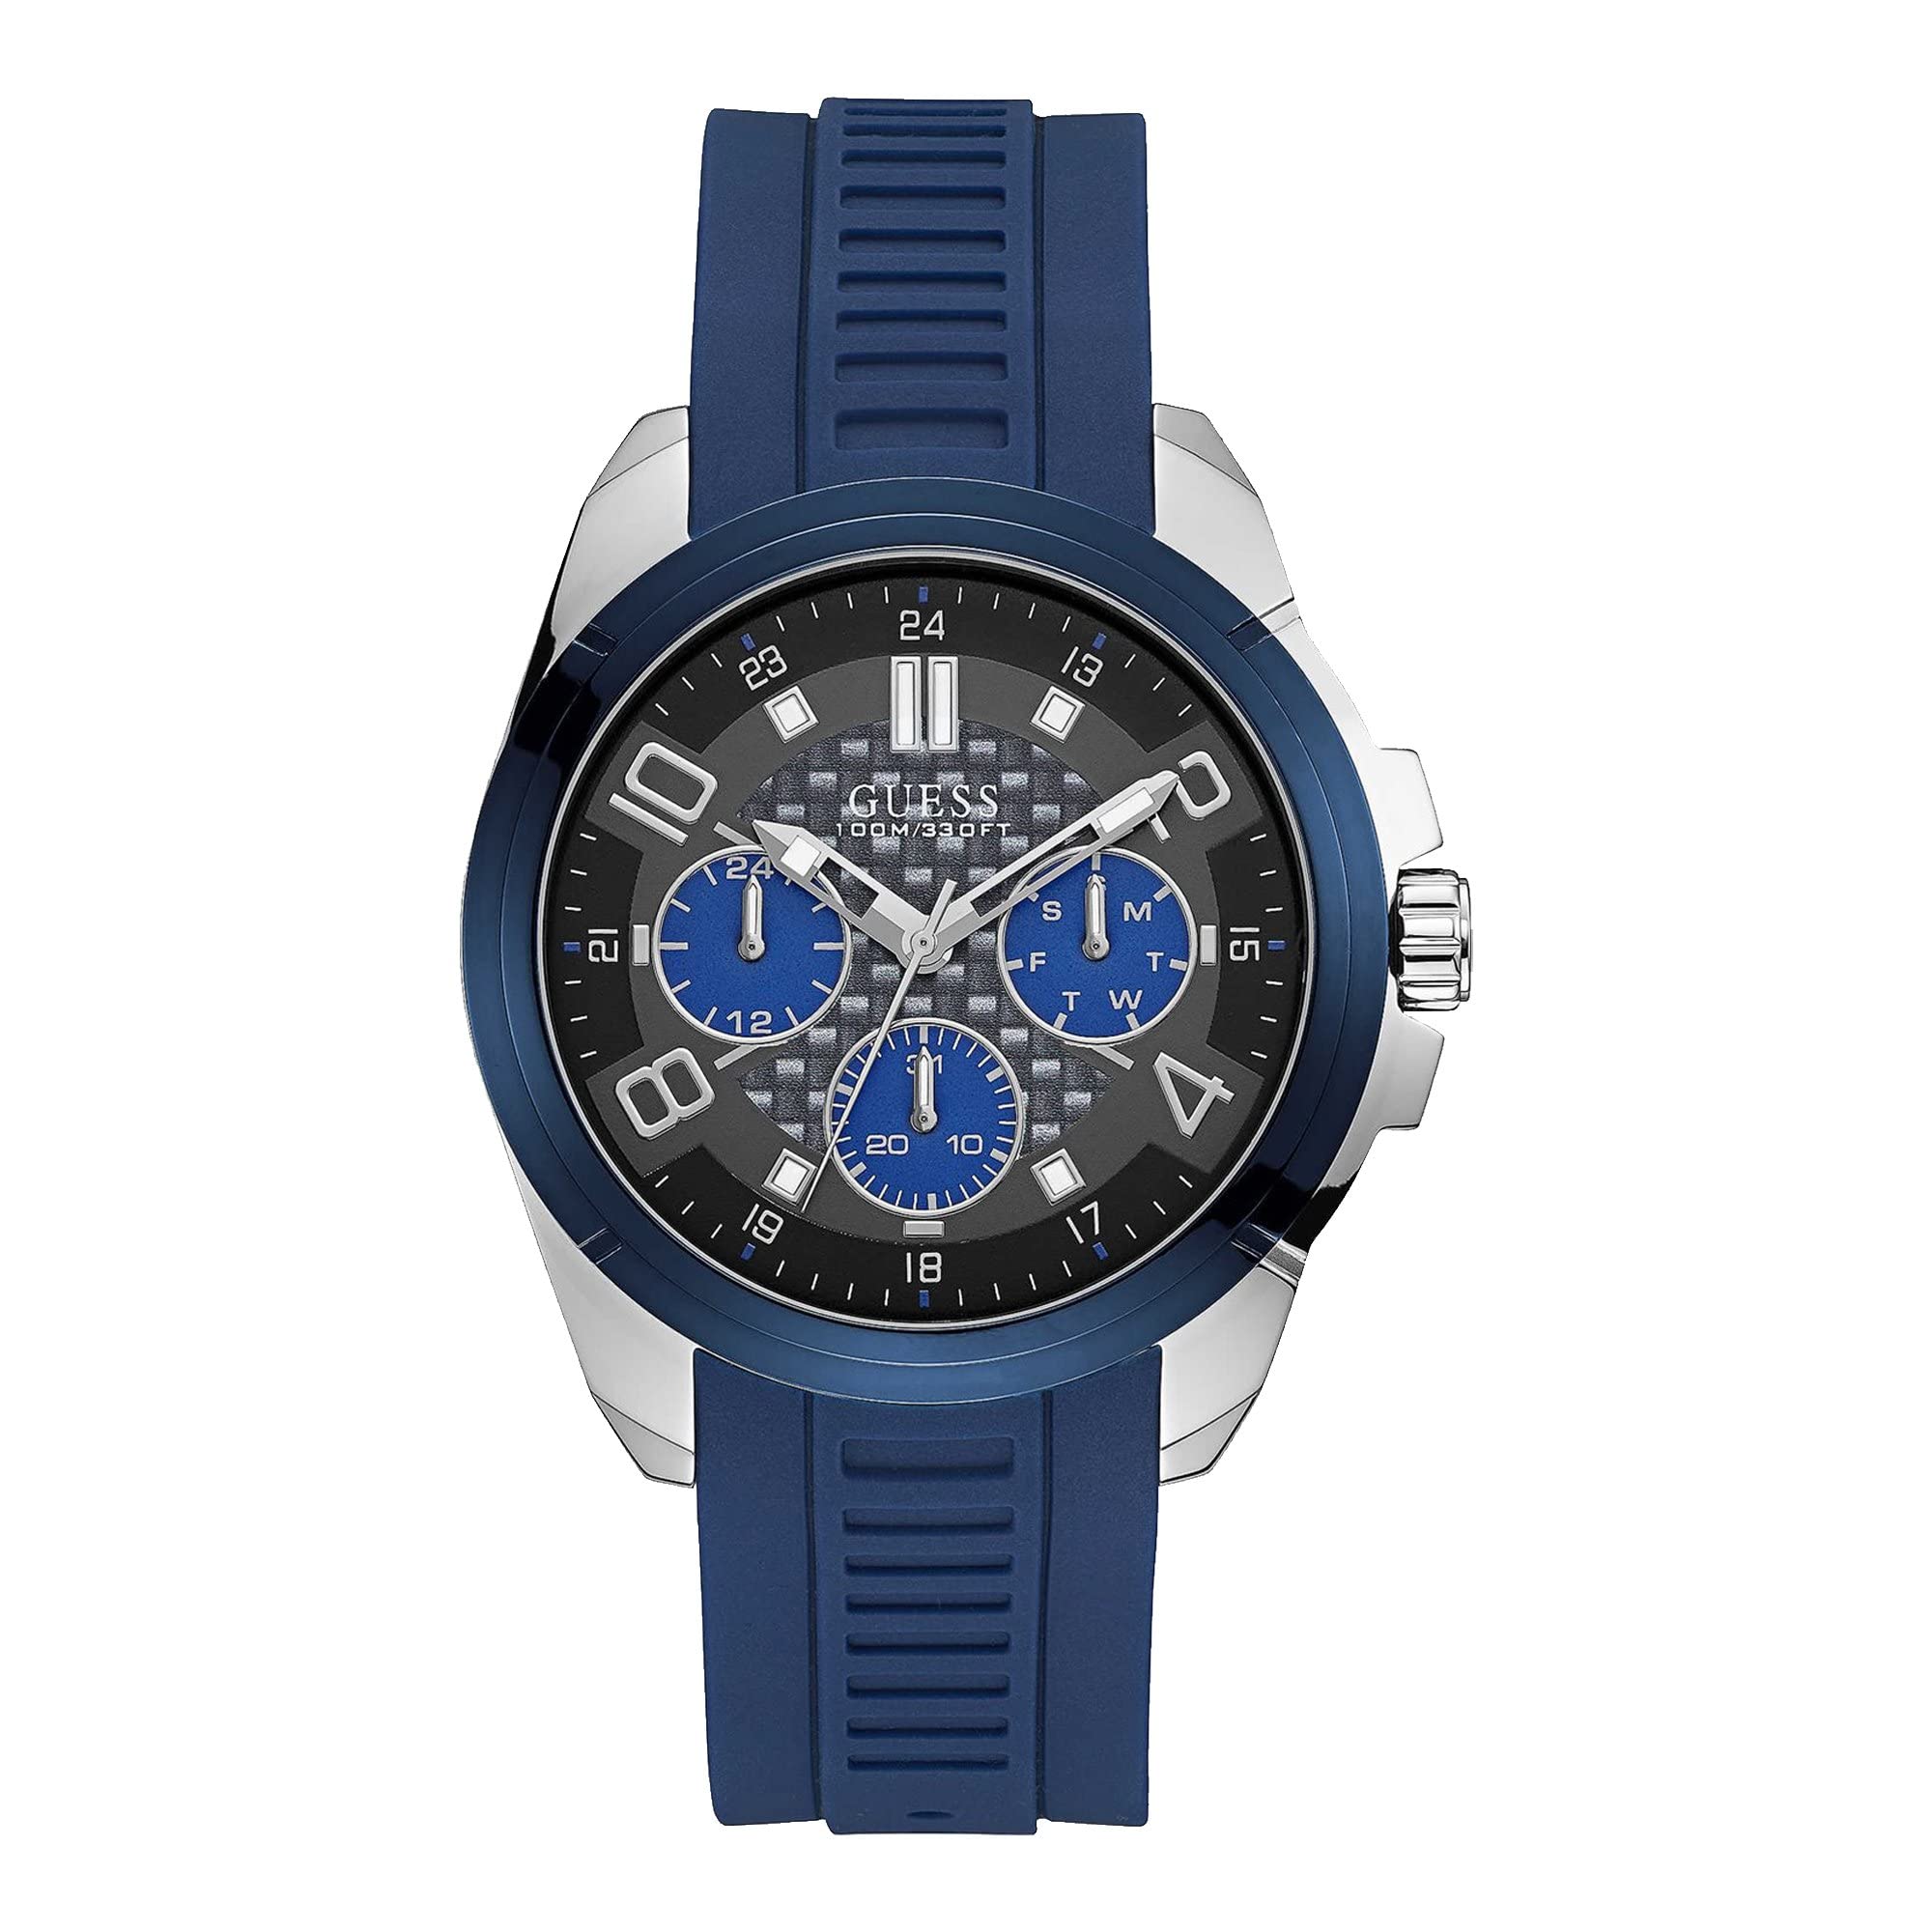 GUESS W1050G1 Analog Watch, Blue, 47MM, w1050g1